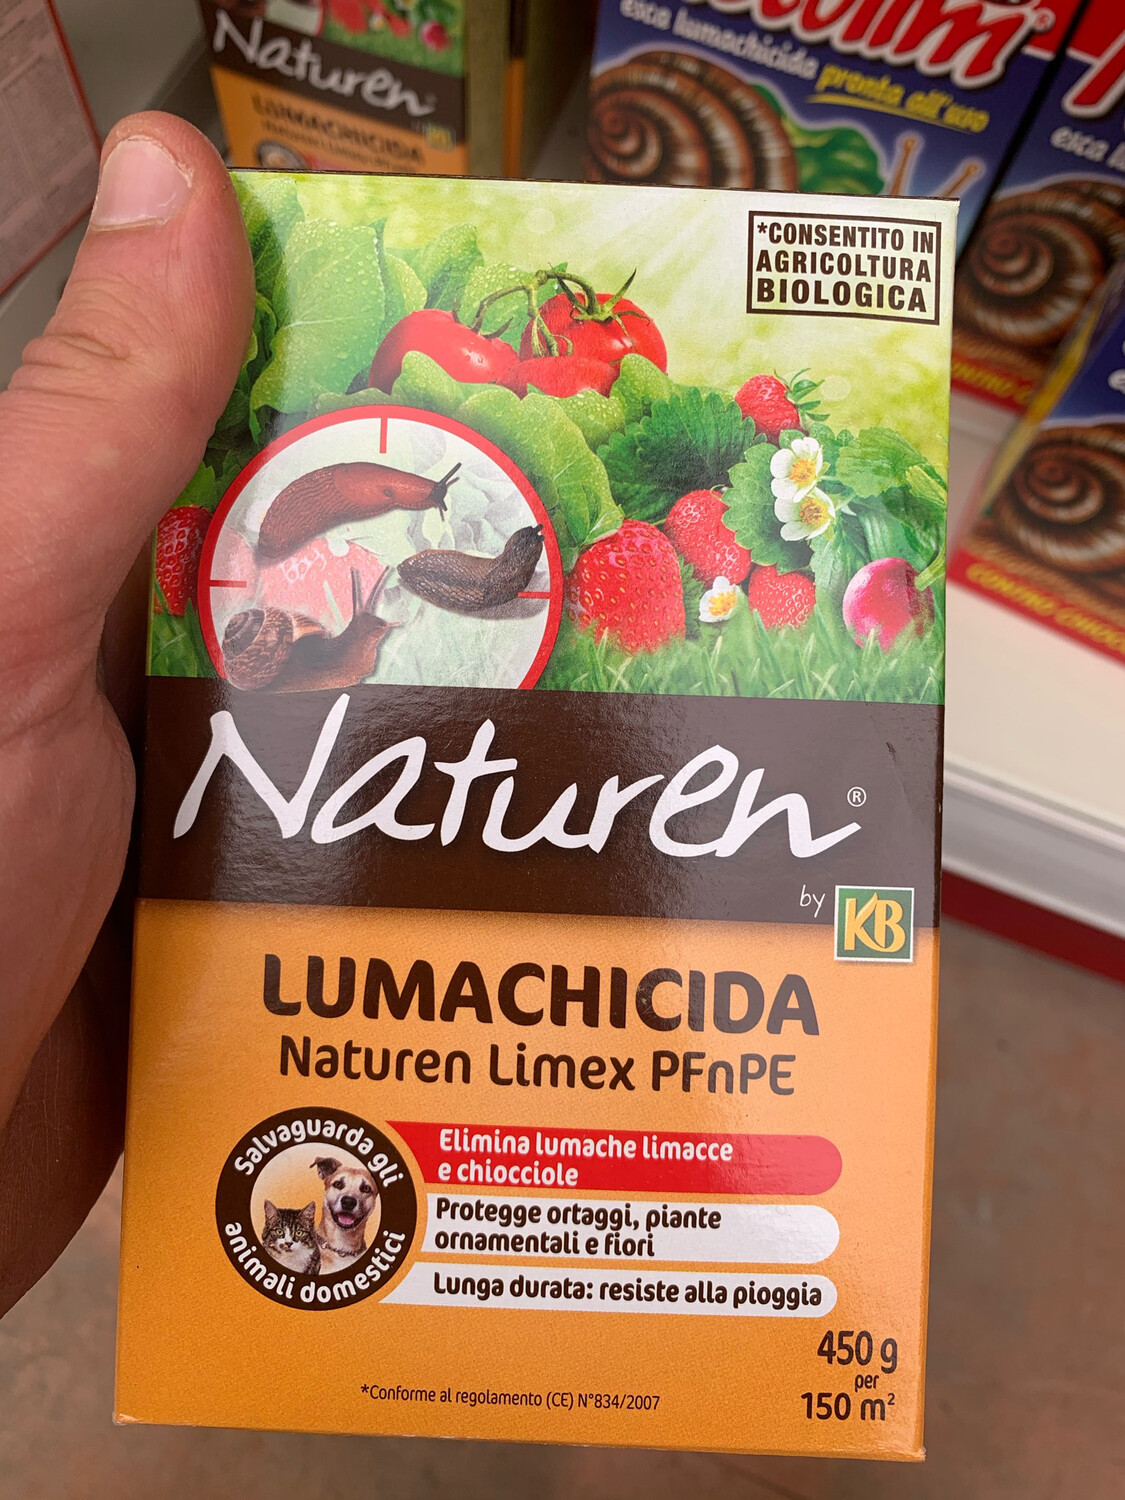 Antilumaca - Lumachicida - Naturen Limex pfnpe BIOLOGICO